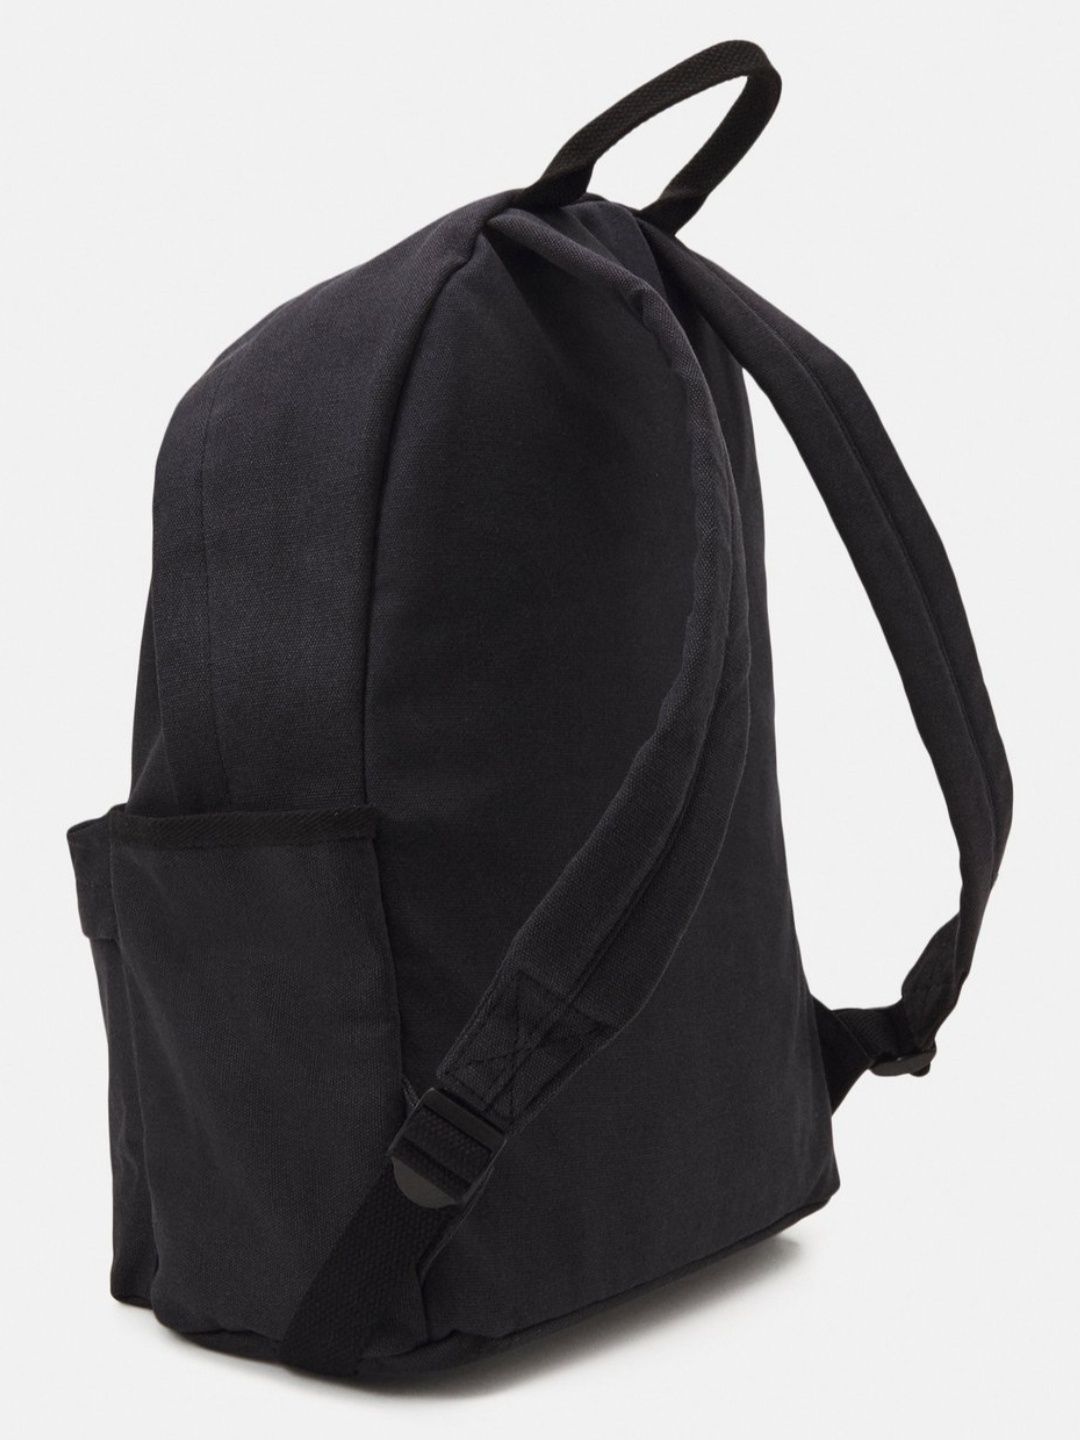 Plecak Typo Fundamental Backpack